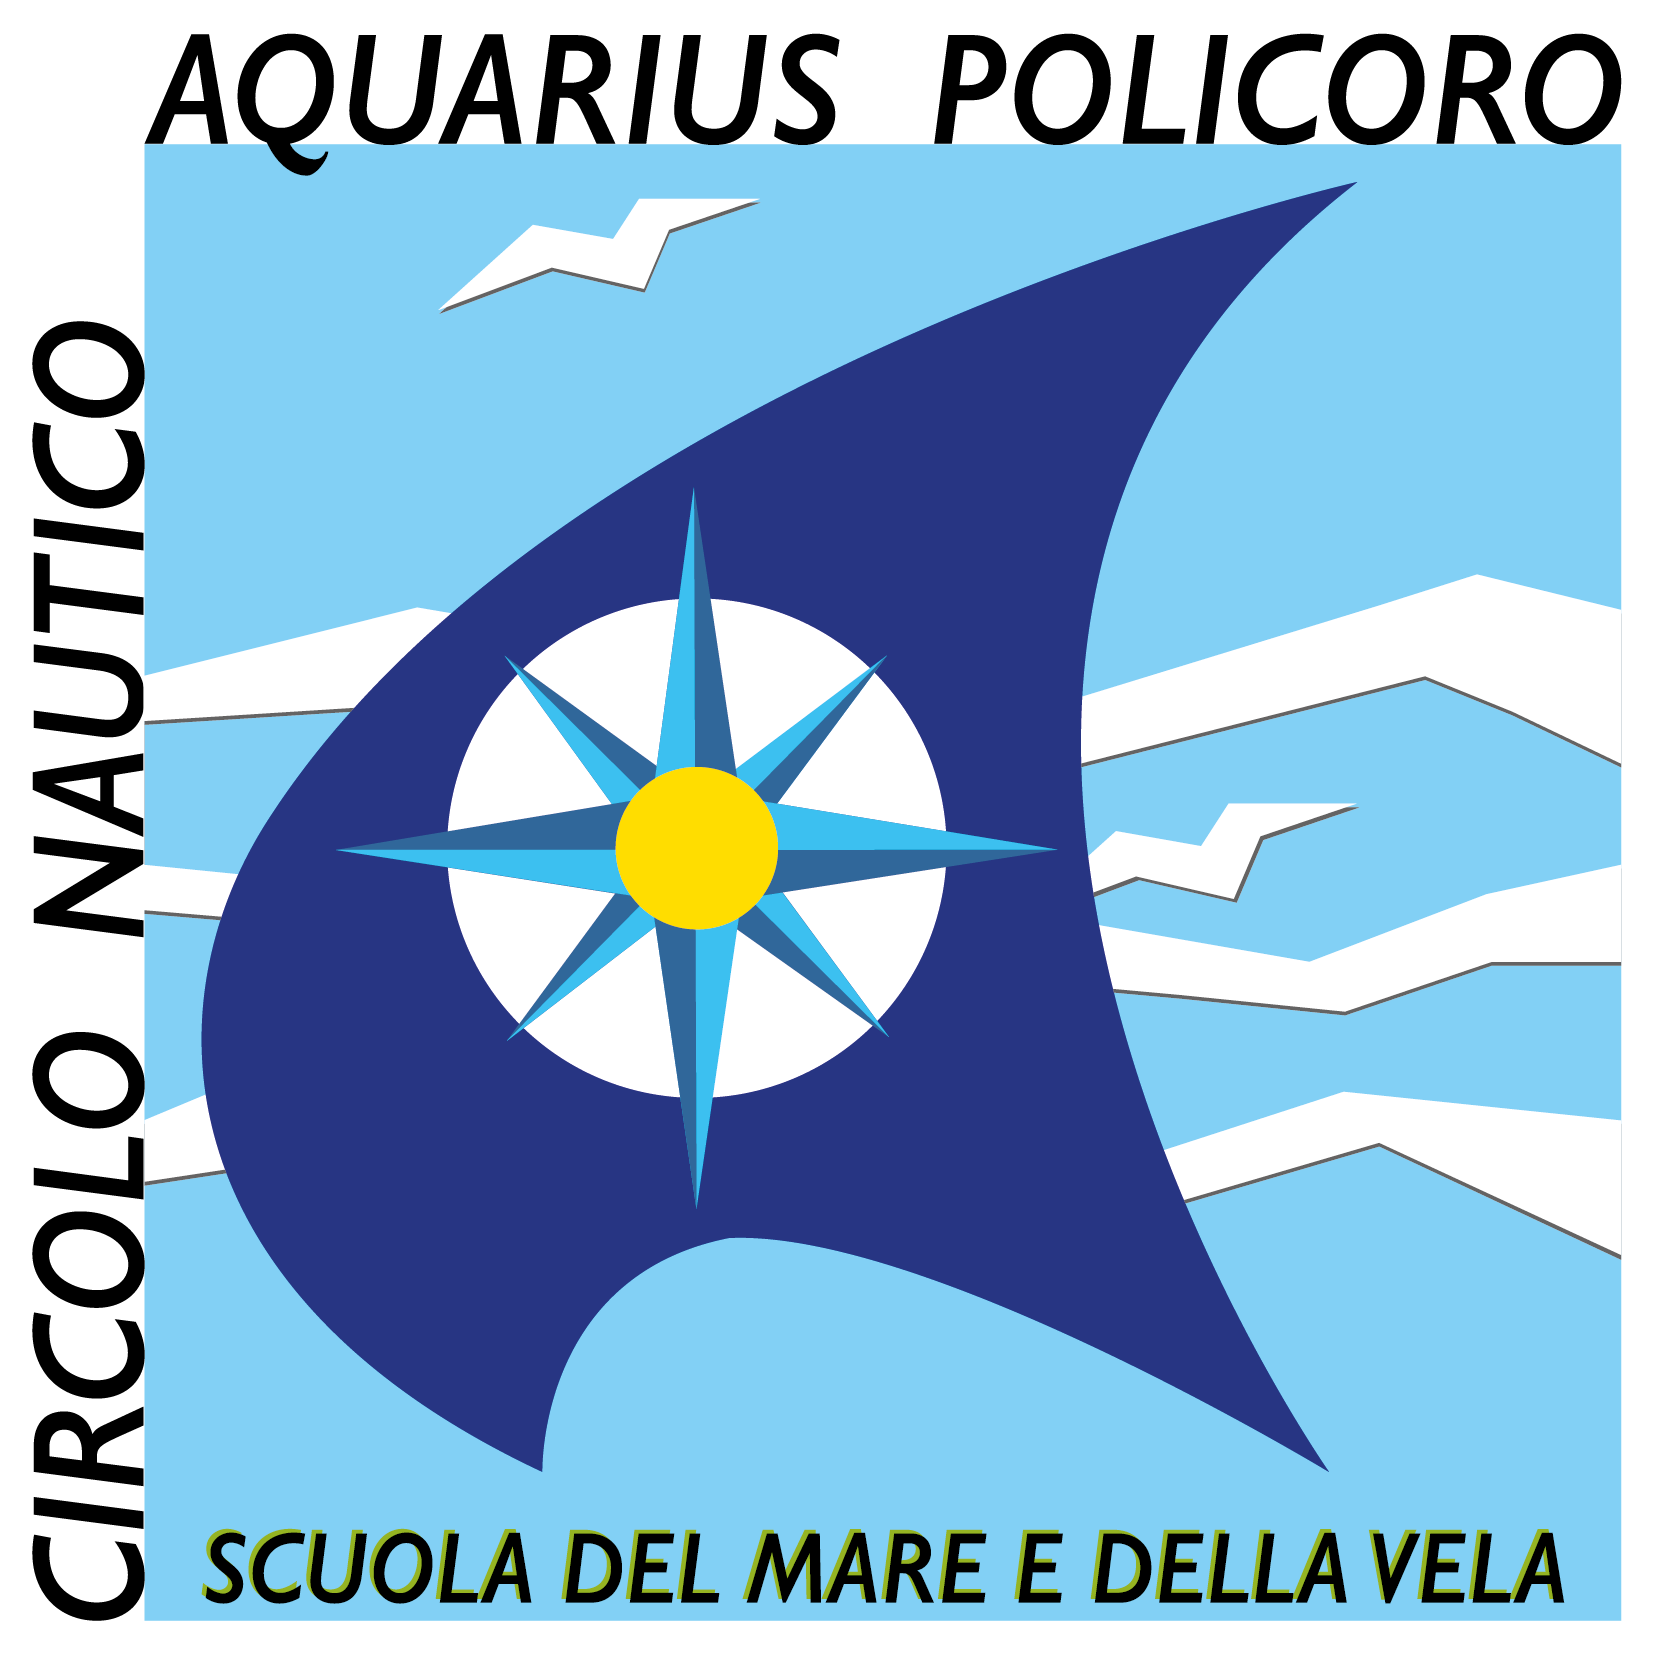 Aquarius Policoro logo